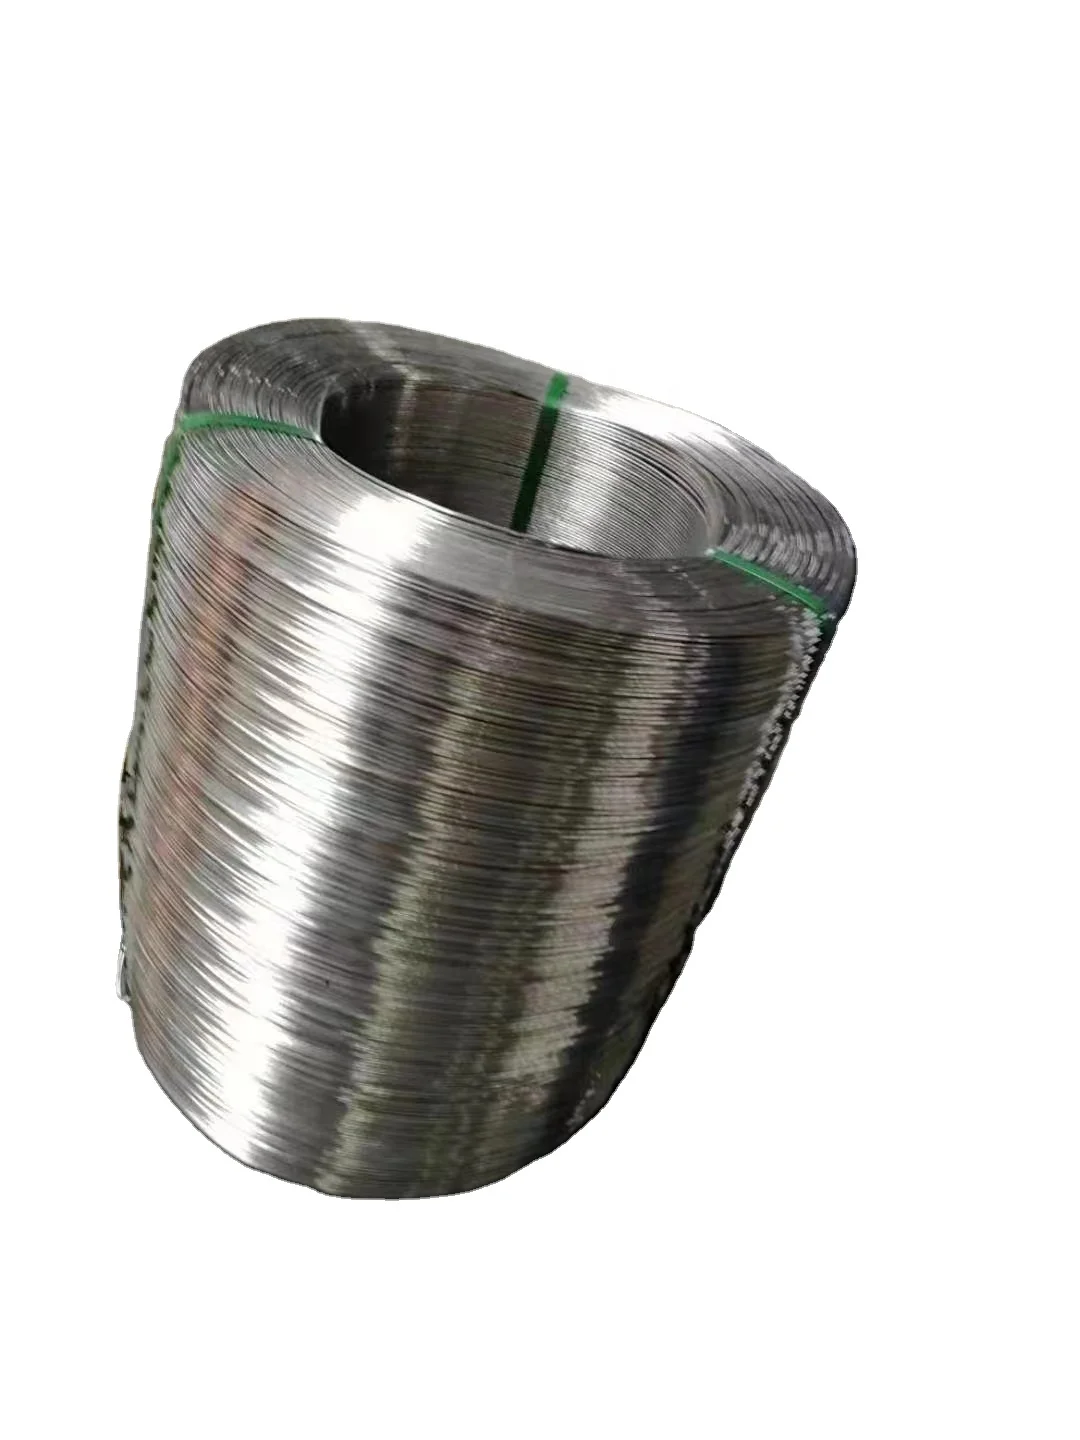 China manufacturers 1050 1060 R H14 H24 2mm 1mm 9.5mm aluminium wire